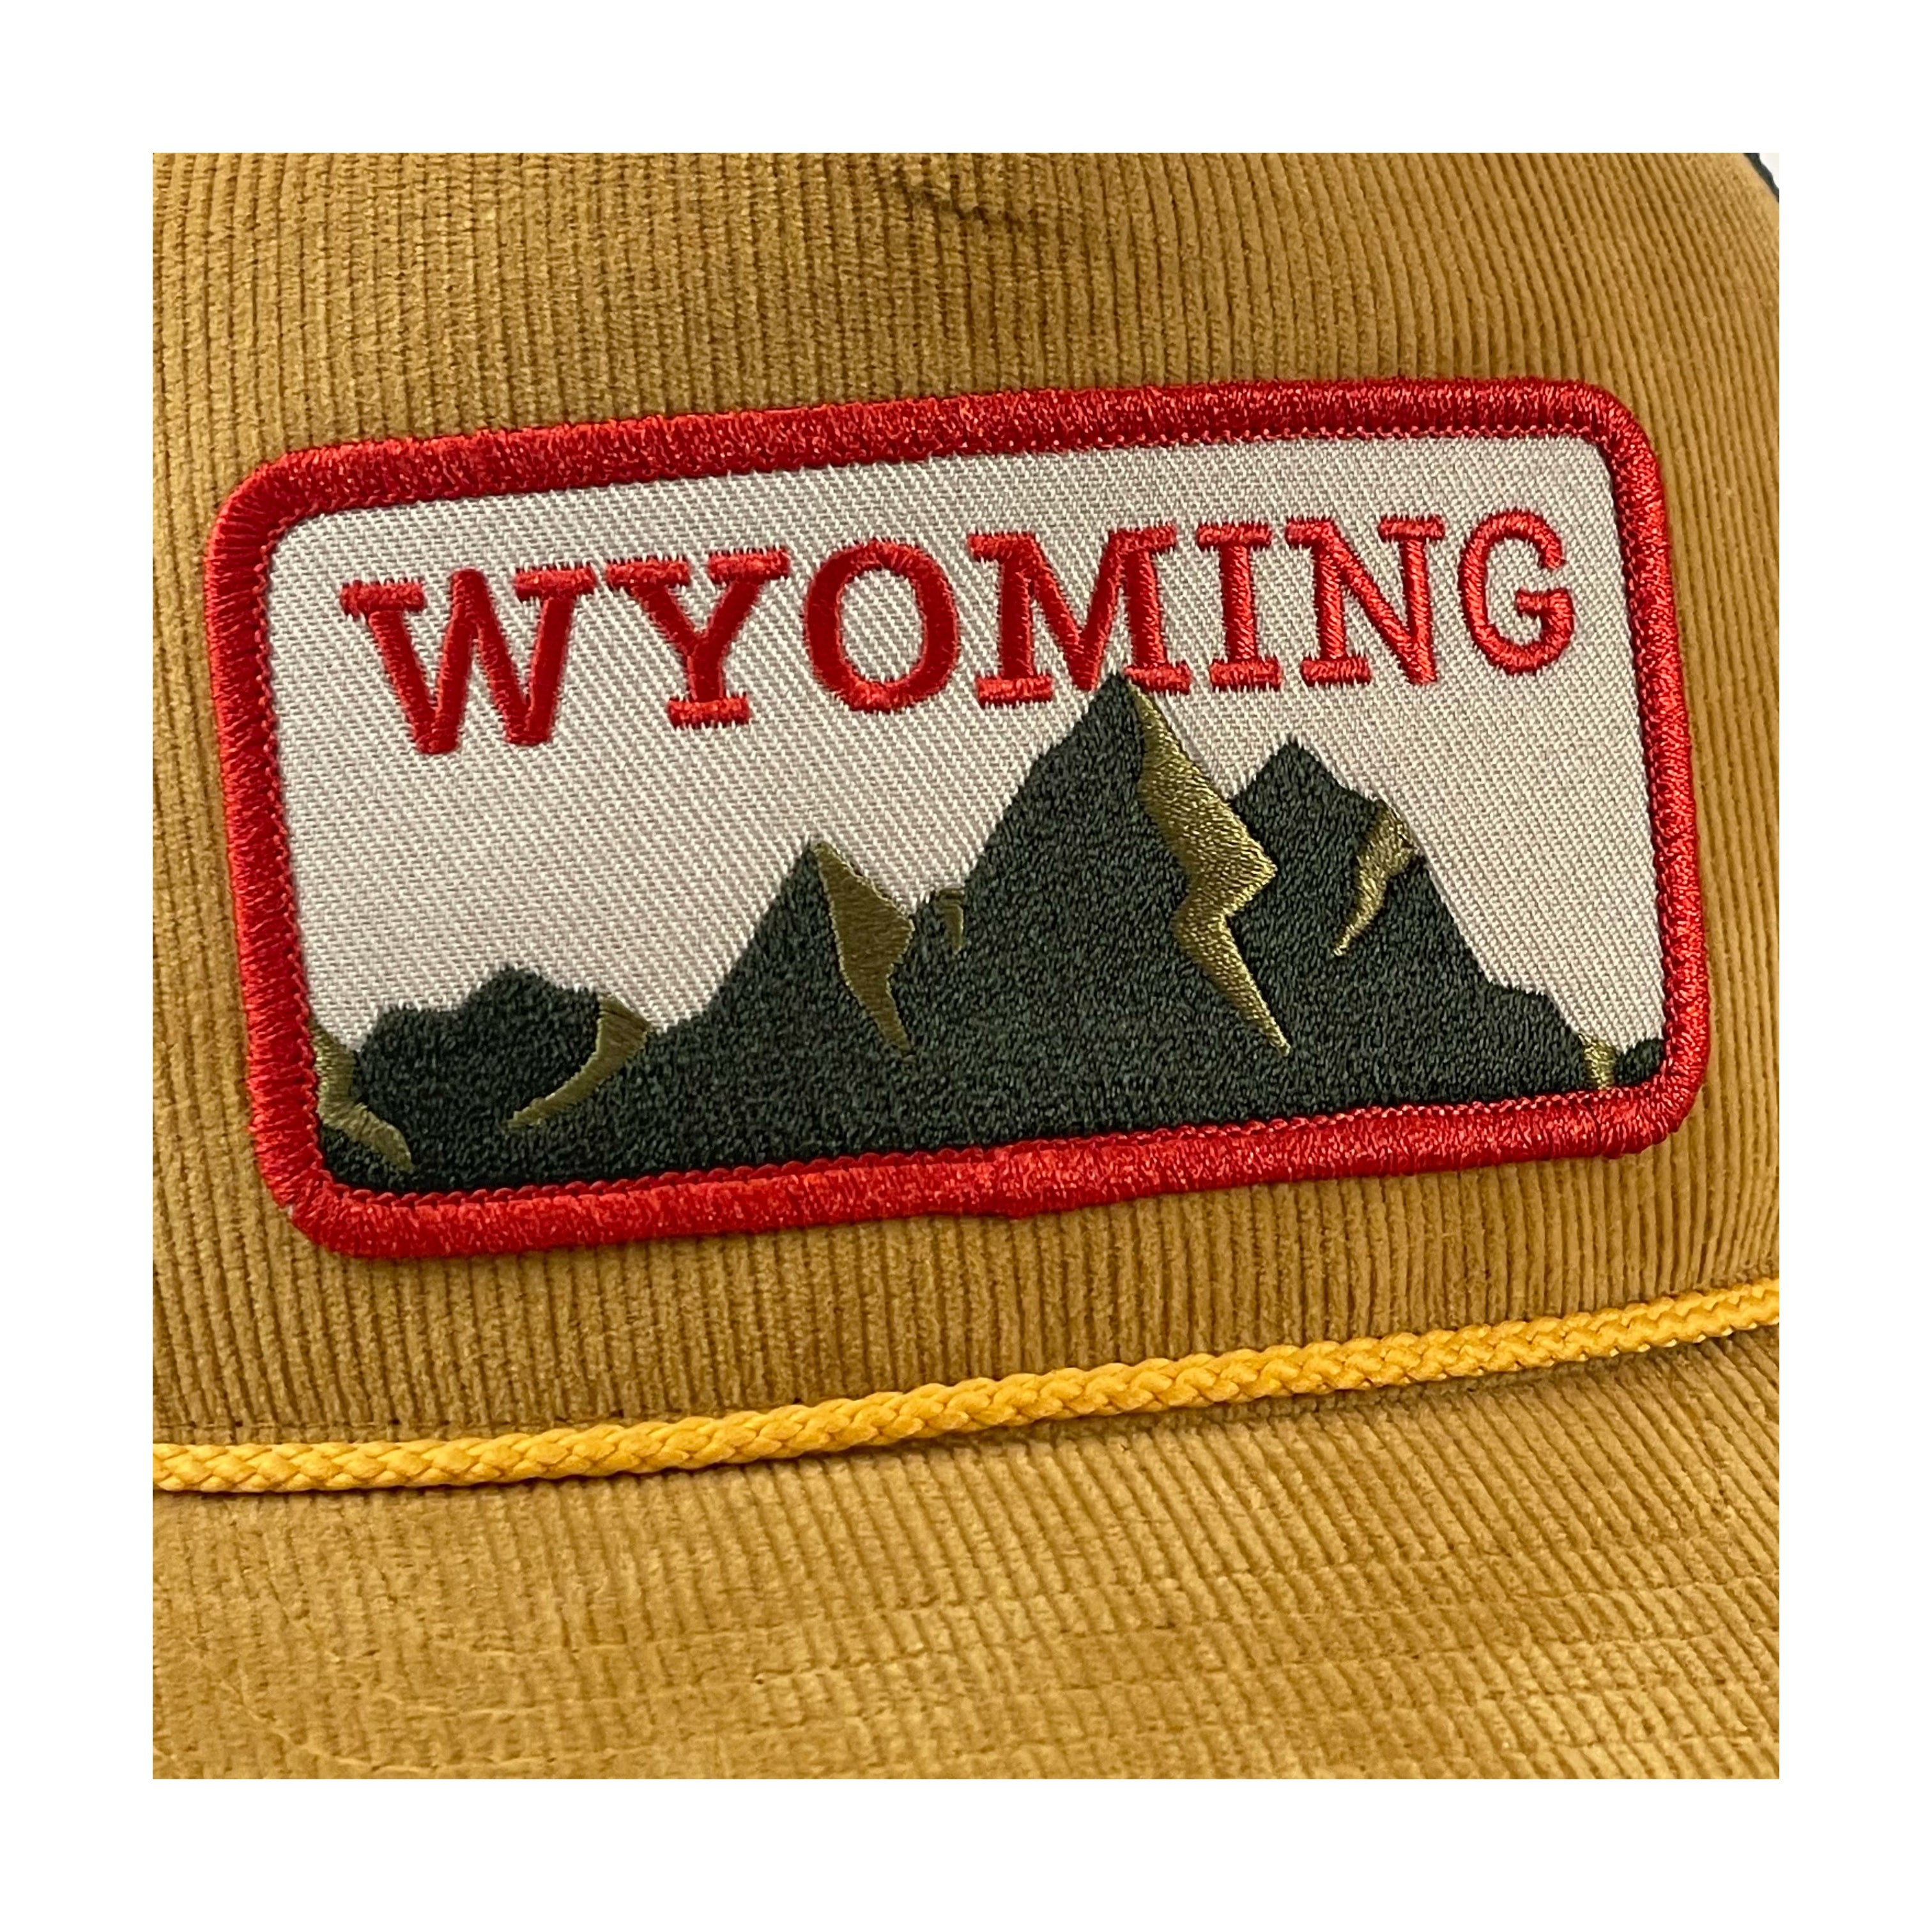 Mustard Wyoming Mountain Patch Hat